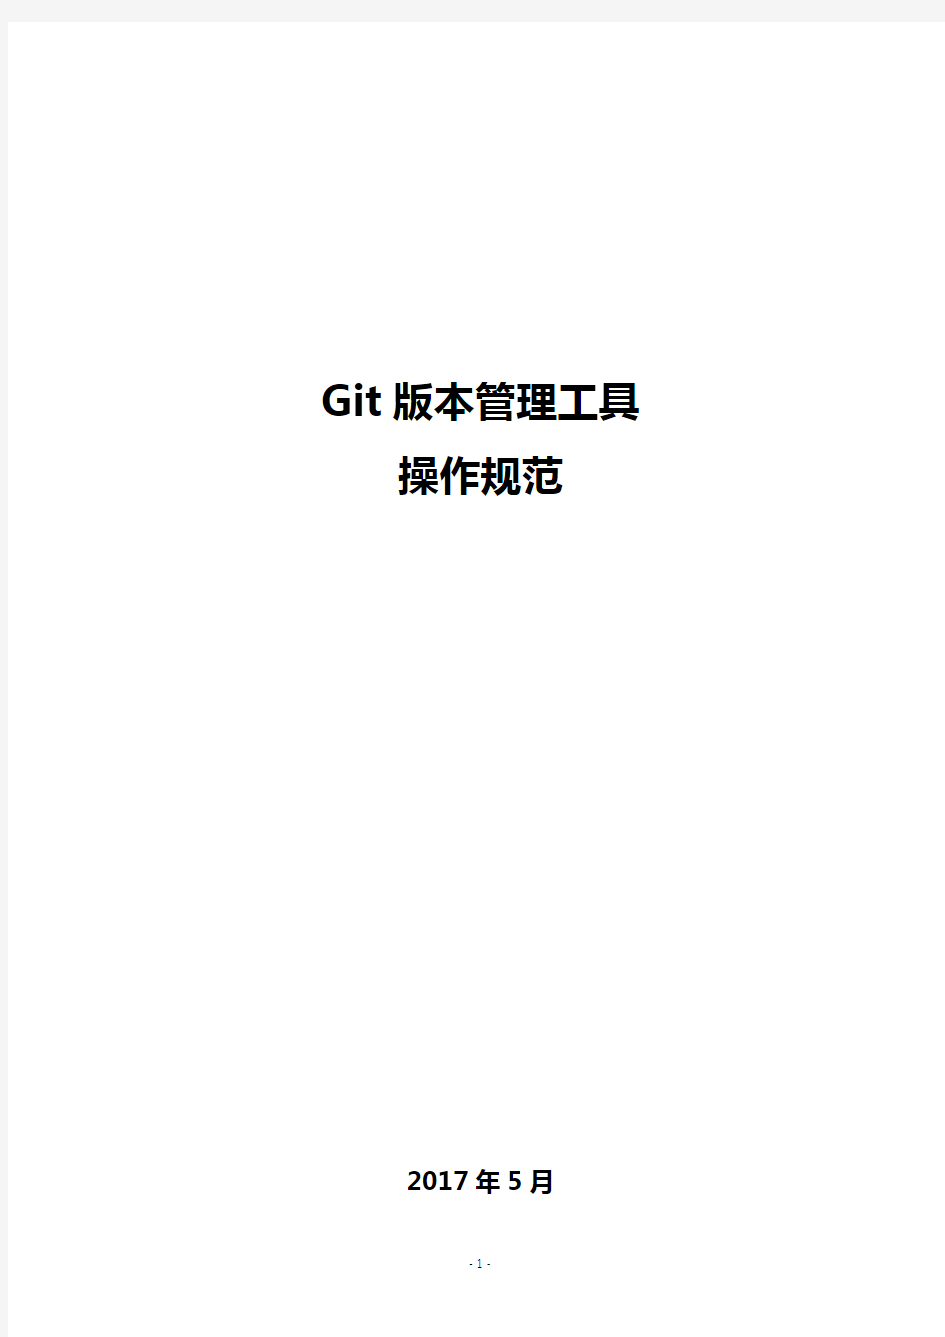 Git版本管理工具操作规范 V1.1